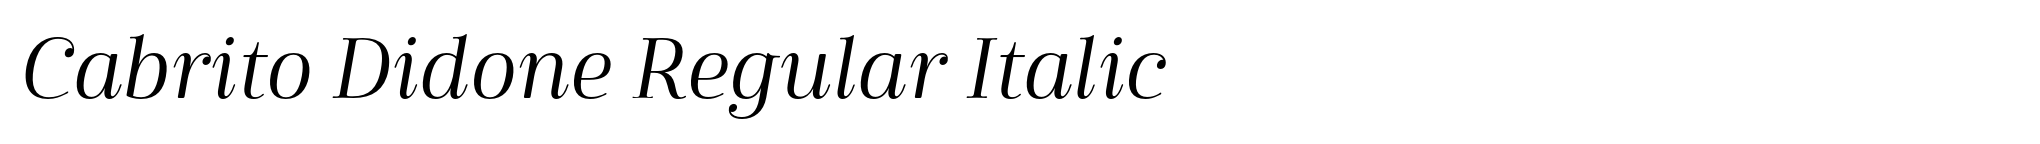 Cabrito Didone Regular Italic image